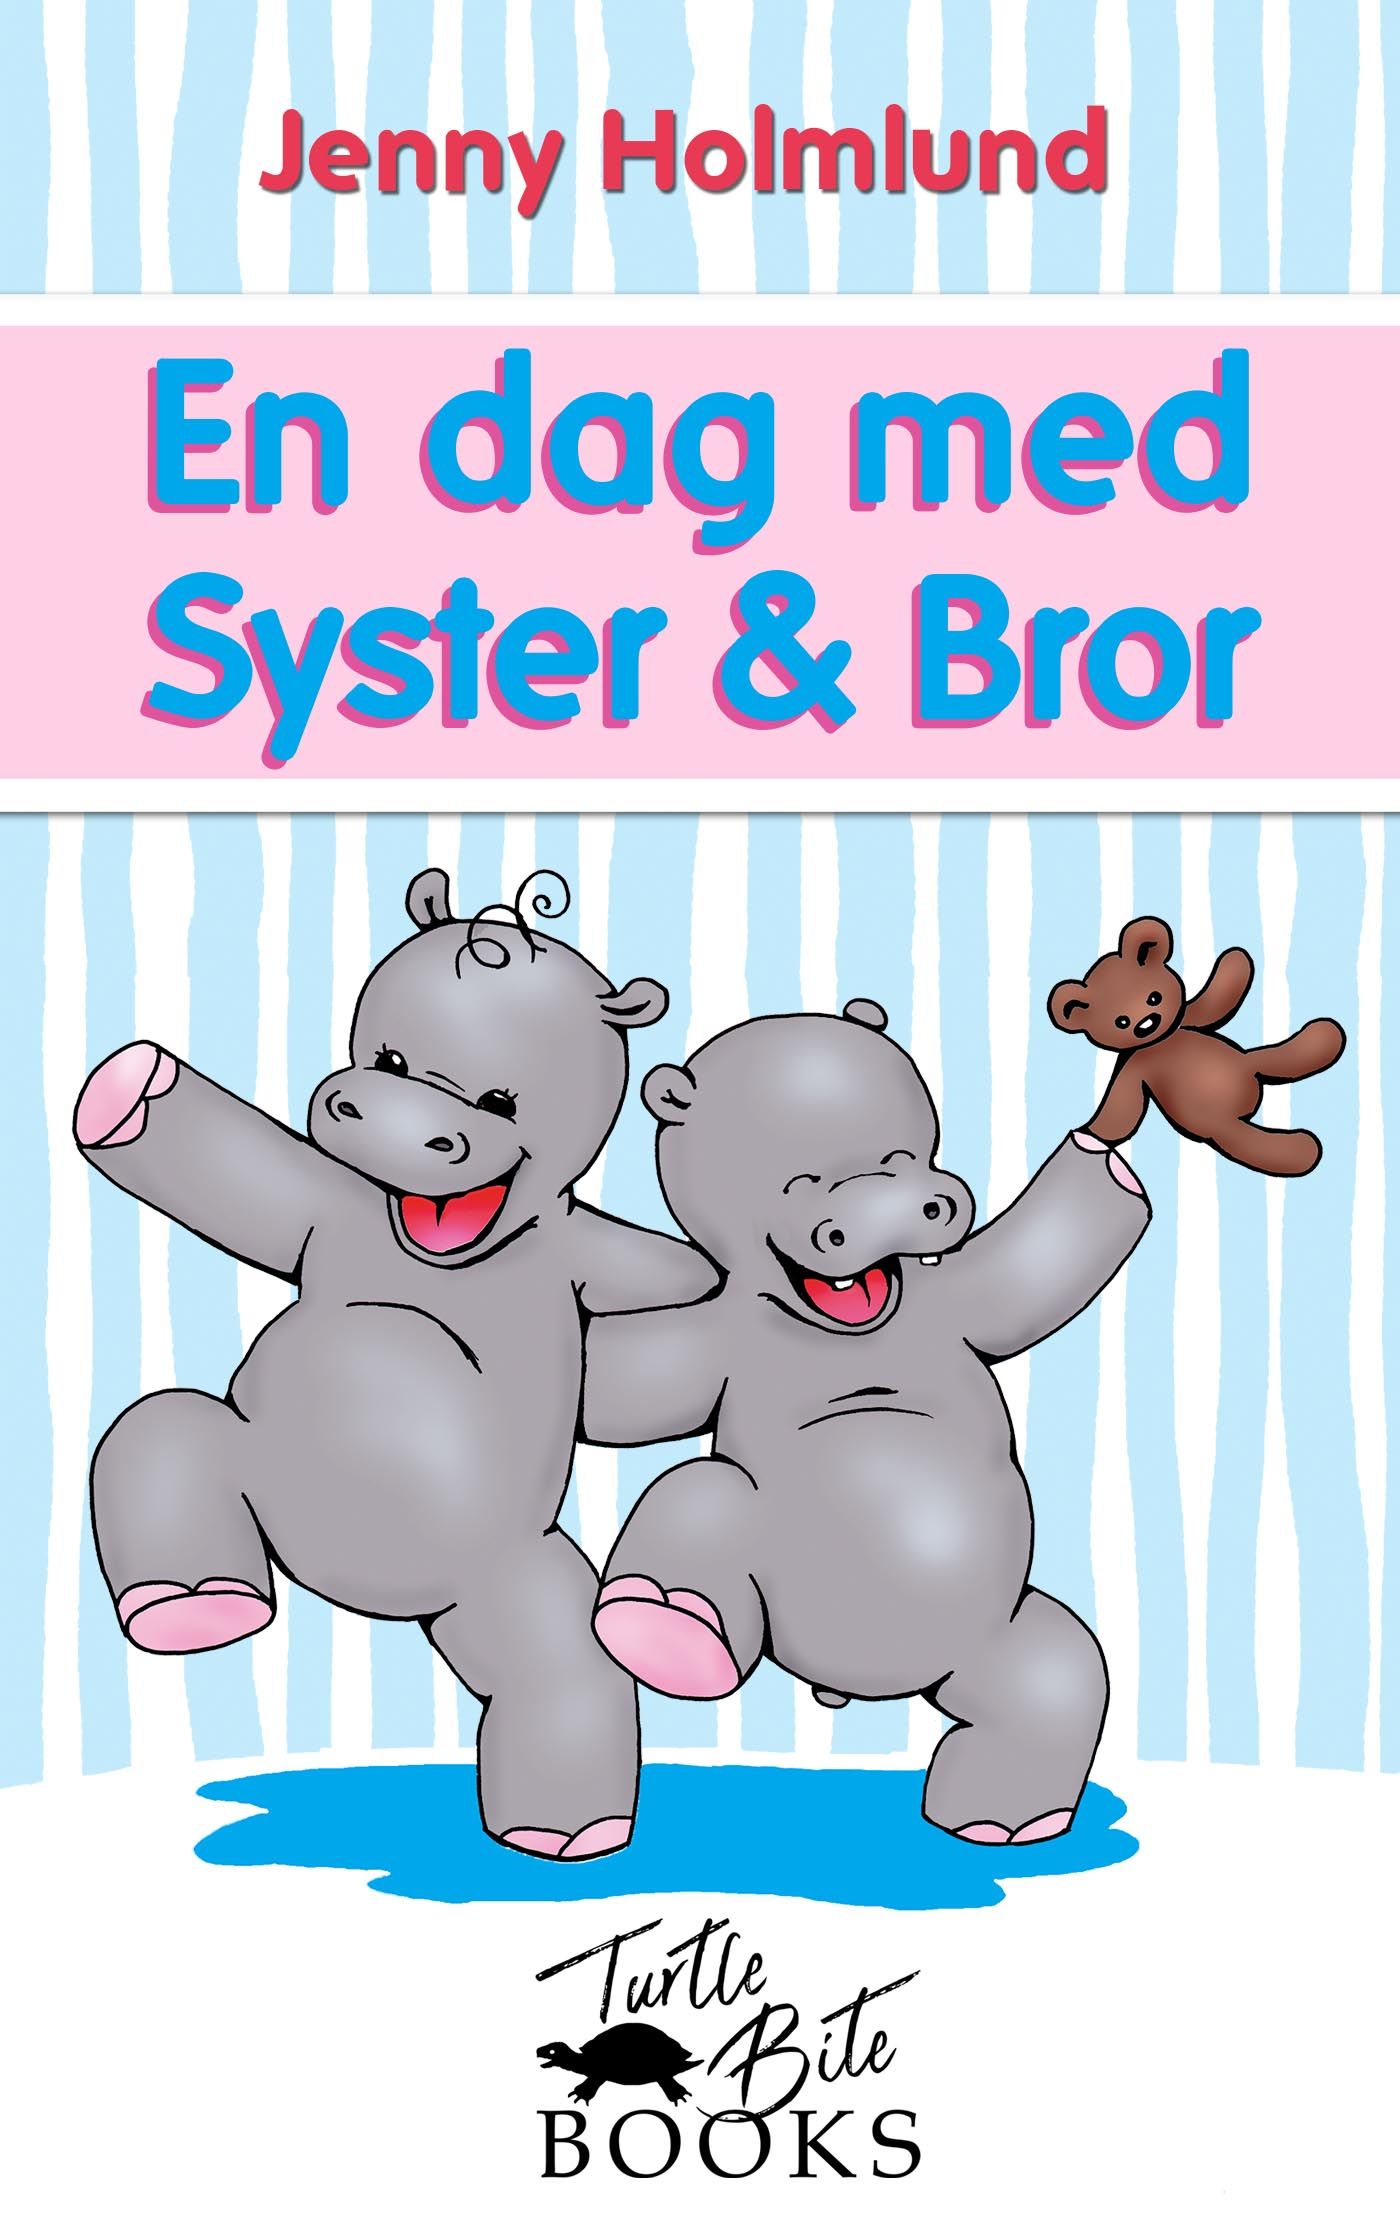 En dag med Syster & Bror, eBook by Jenny Holmlund